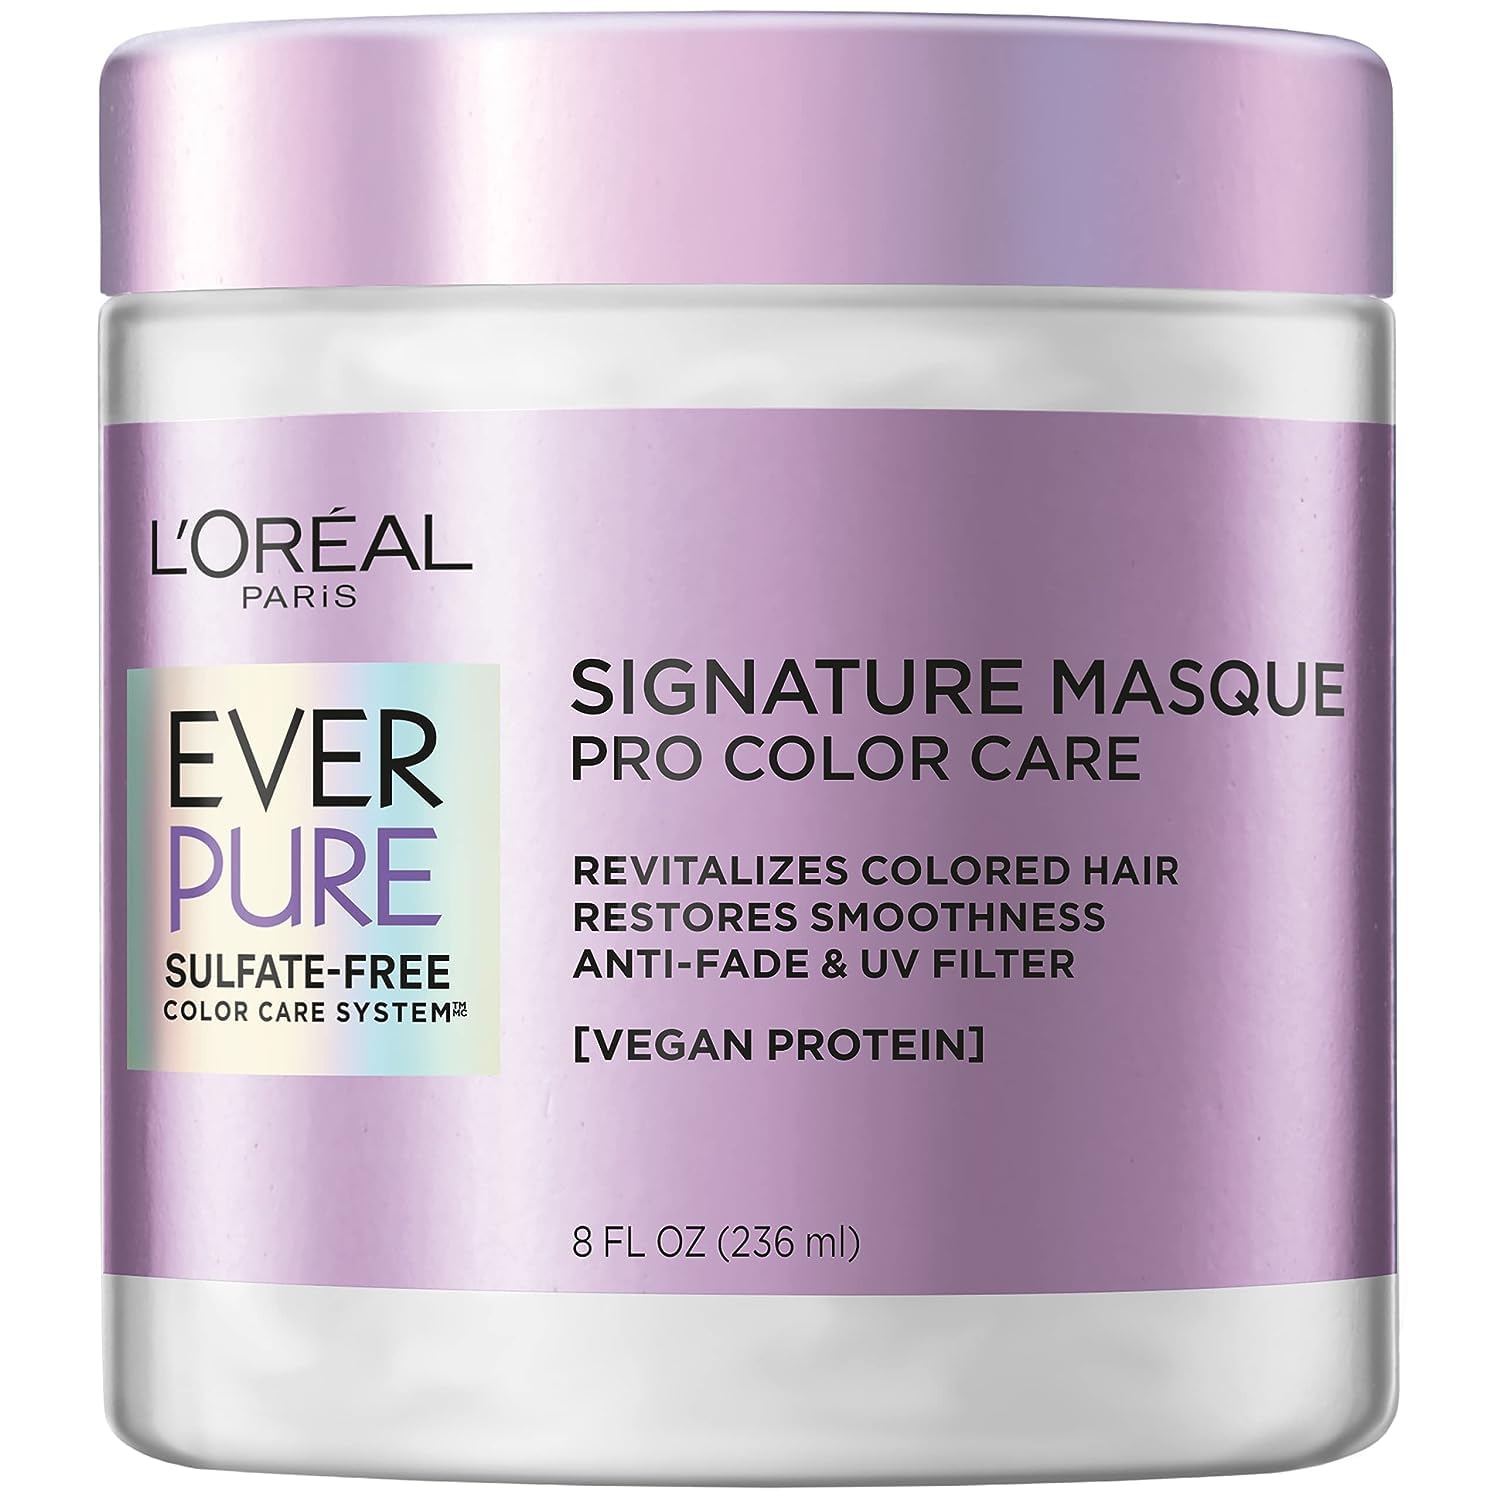 L'Oreal Paris EverPure Sulfate Free Signature Masque Pro Color Care, Hair Mask, 8 fl oz